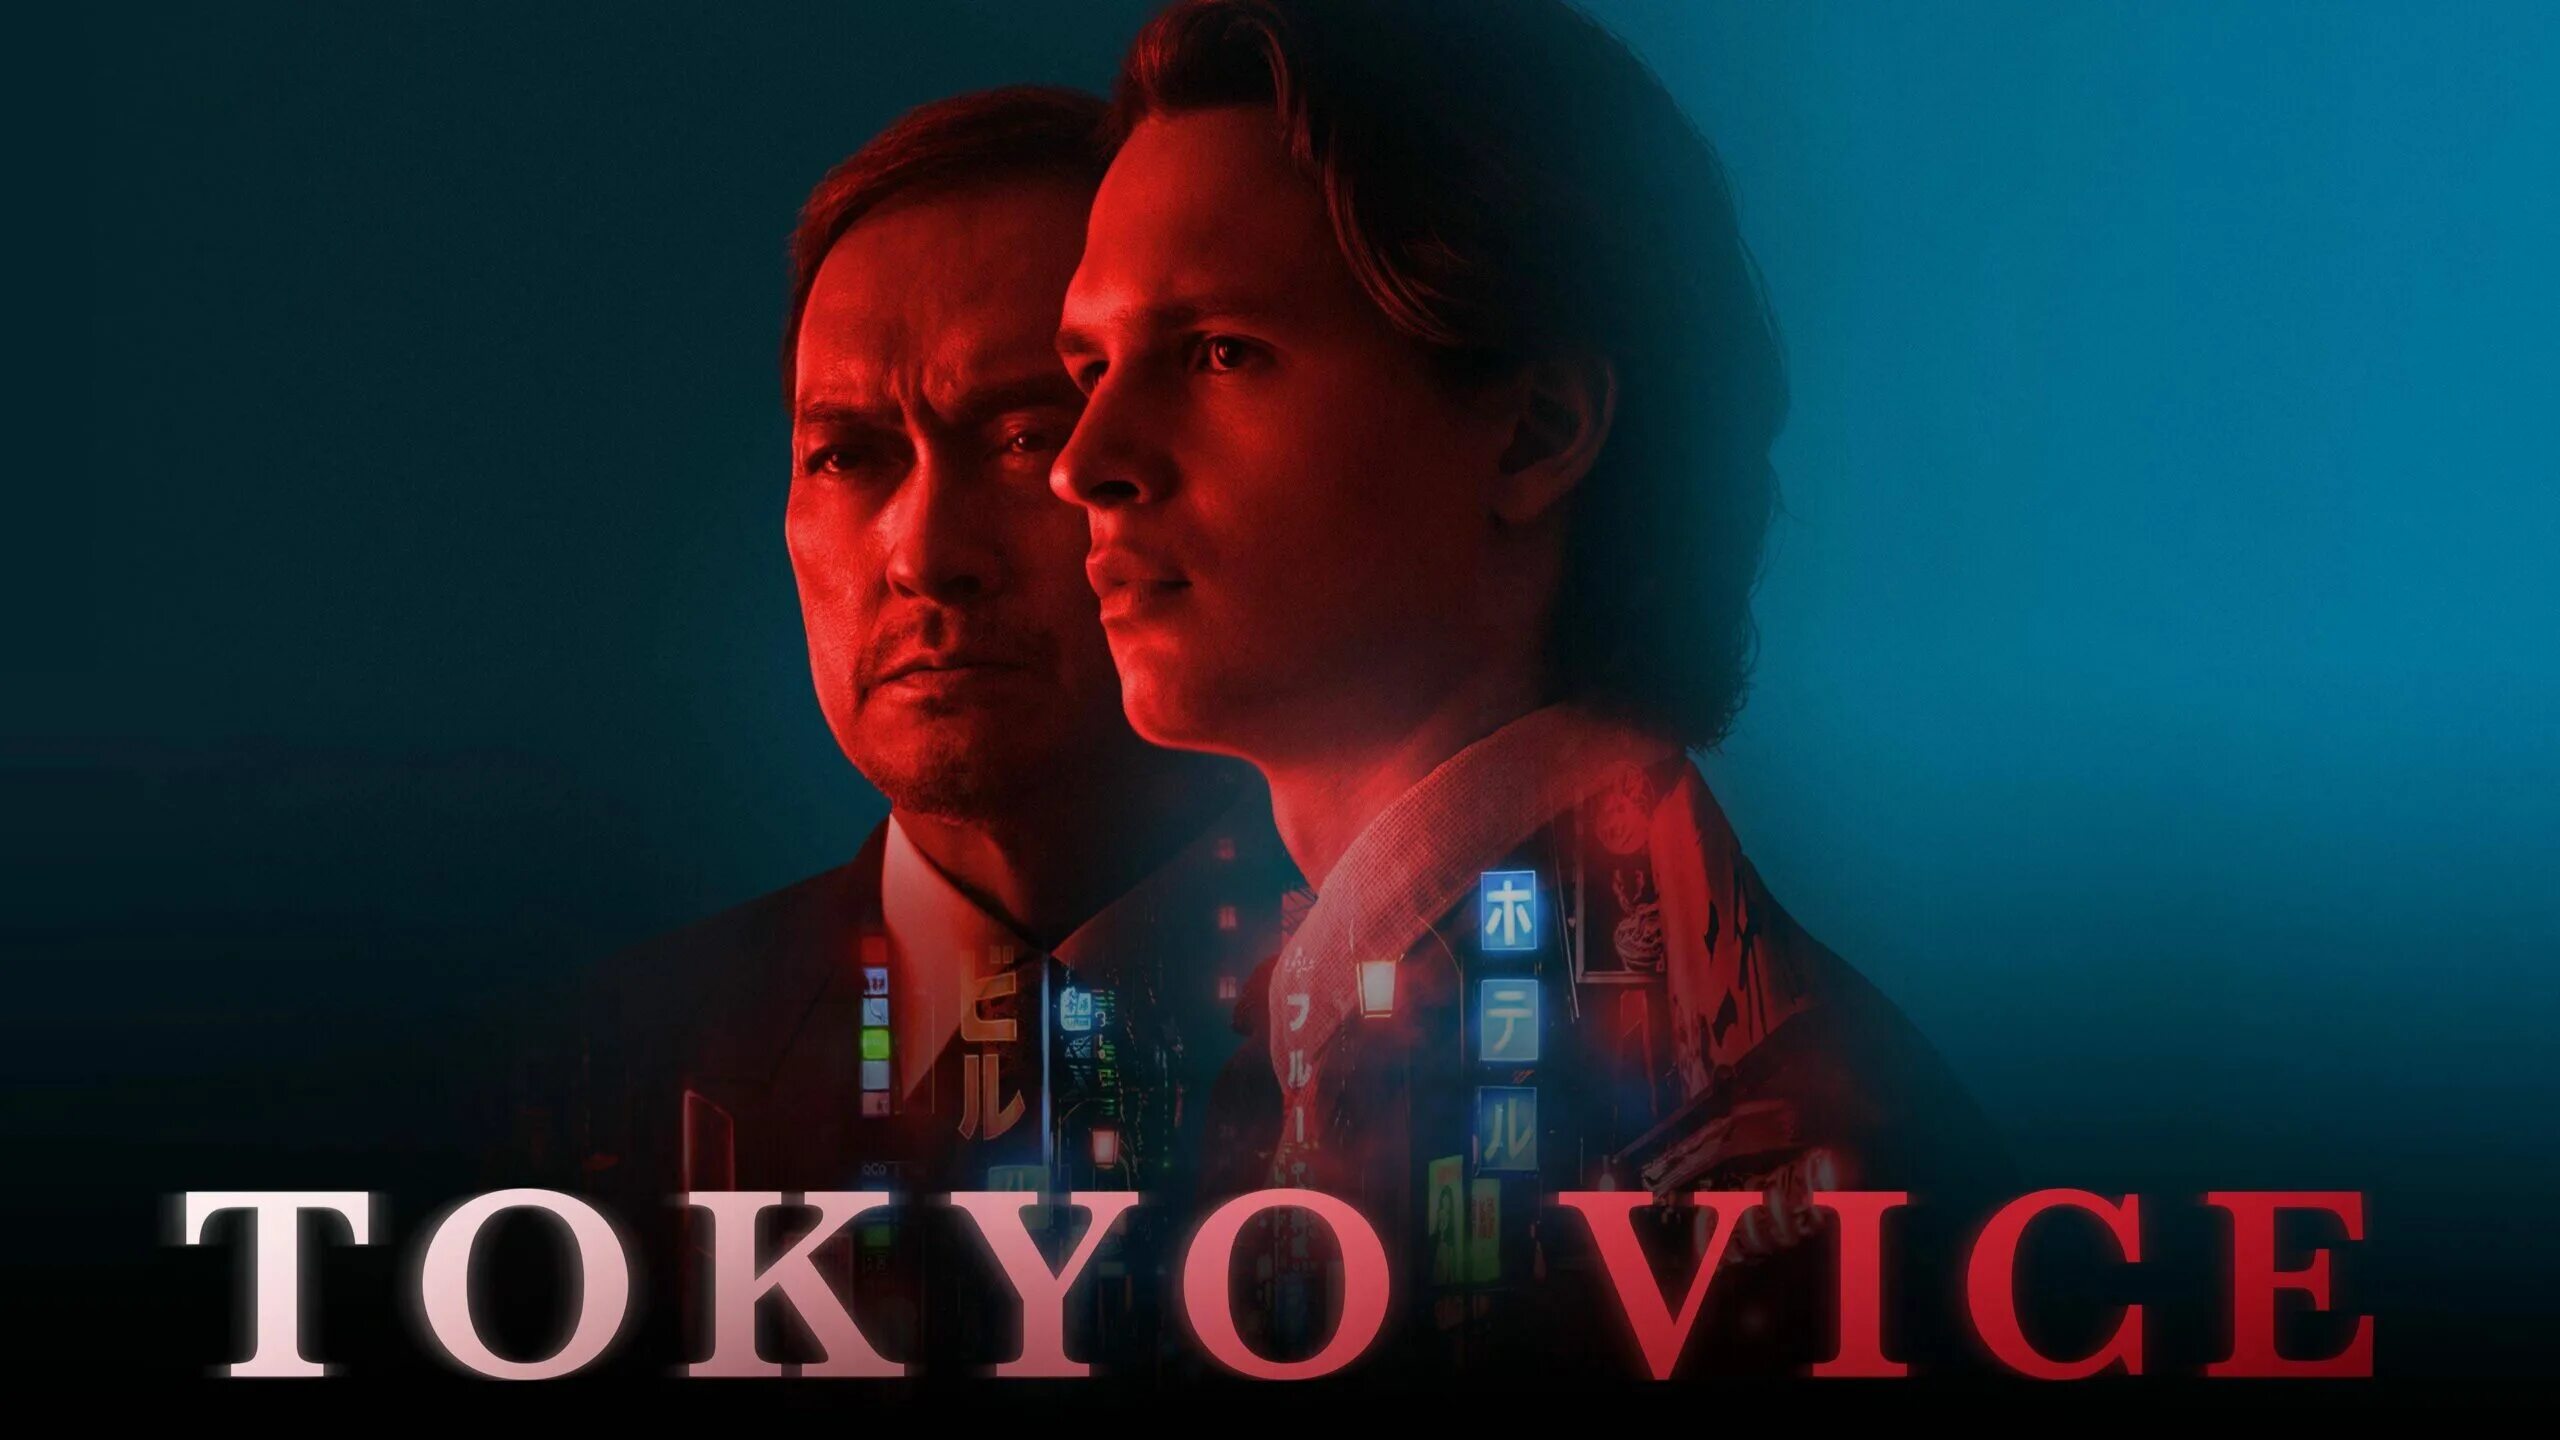 Tokyo vice 2